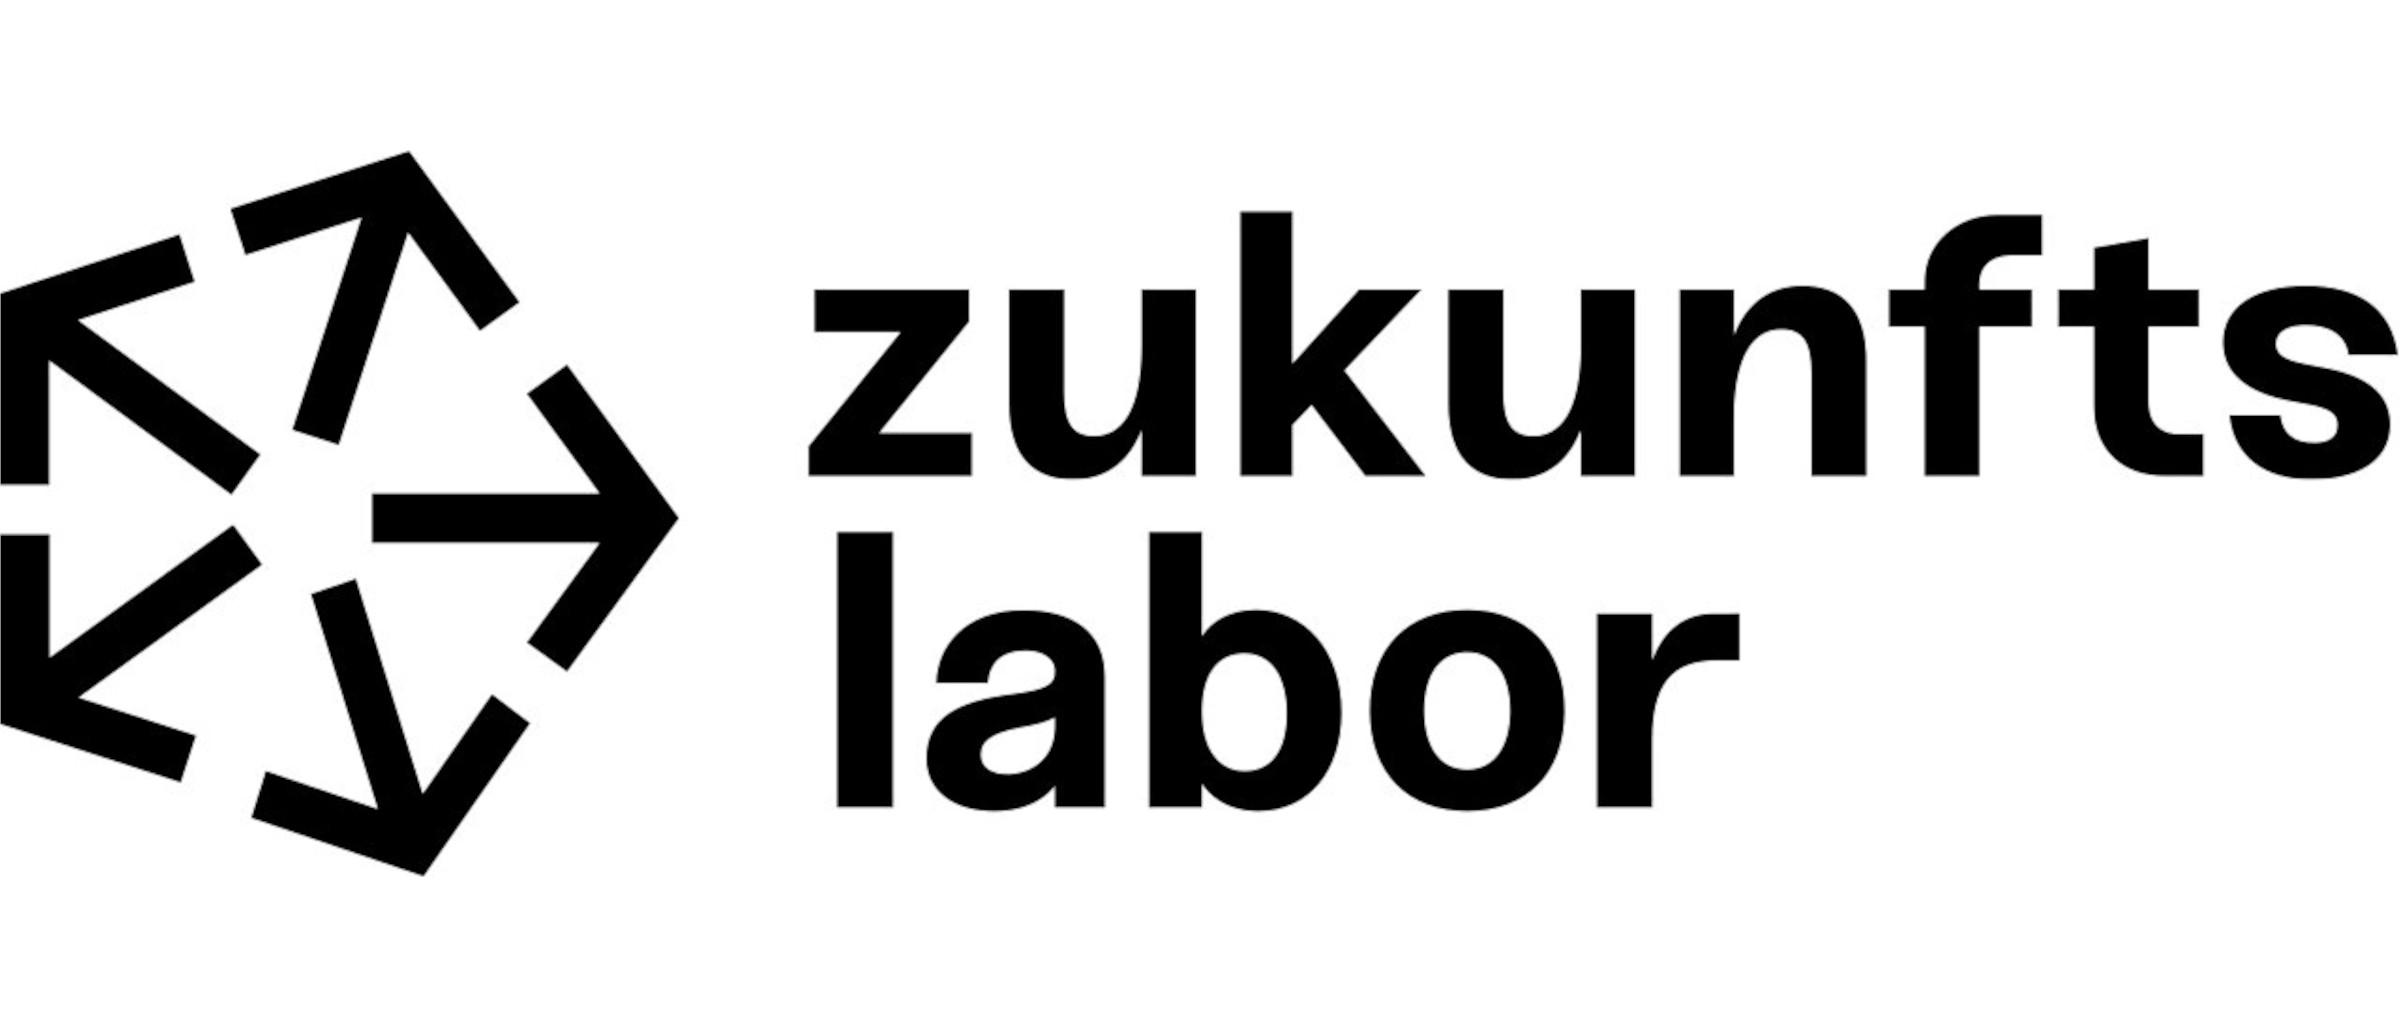 Logo Zukunftslabor